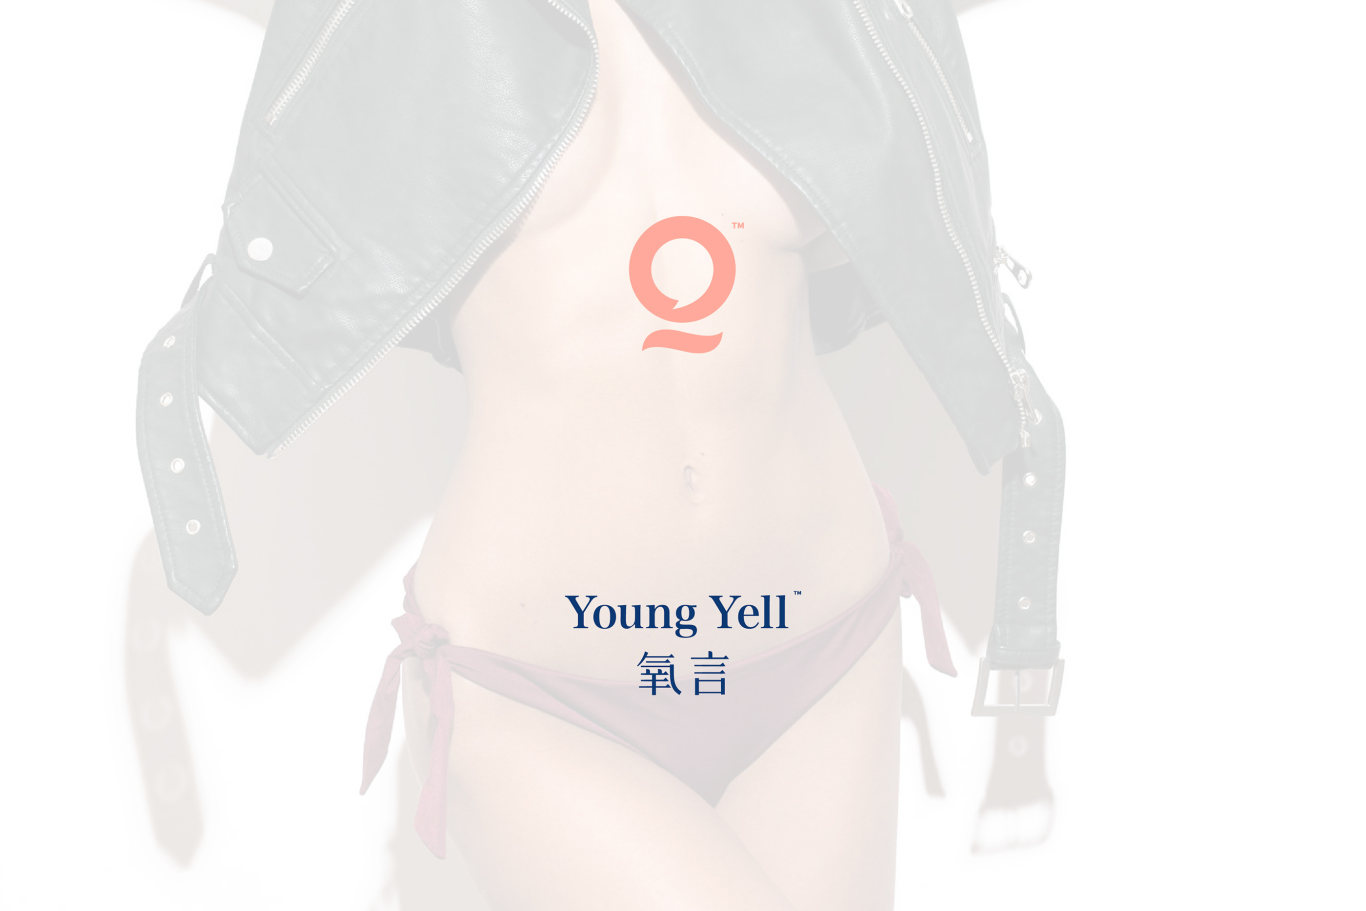 氧言品牌VI設計 Young Yell Brand VI Design | 高端內衣服裝行業LOGO設計圖12